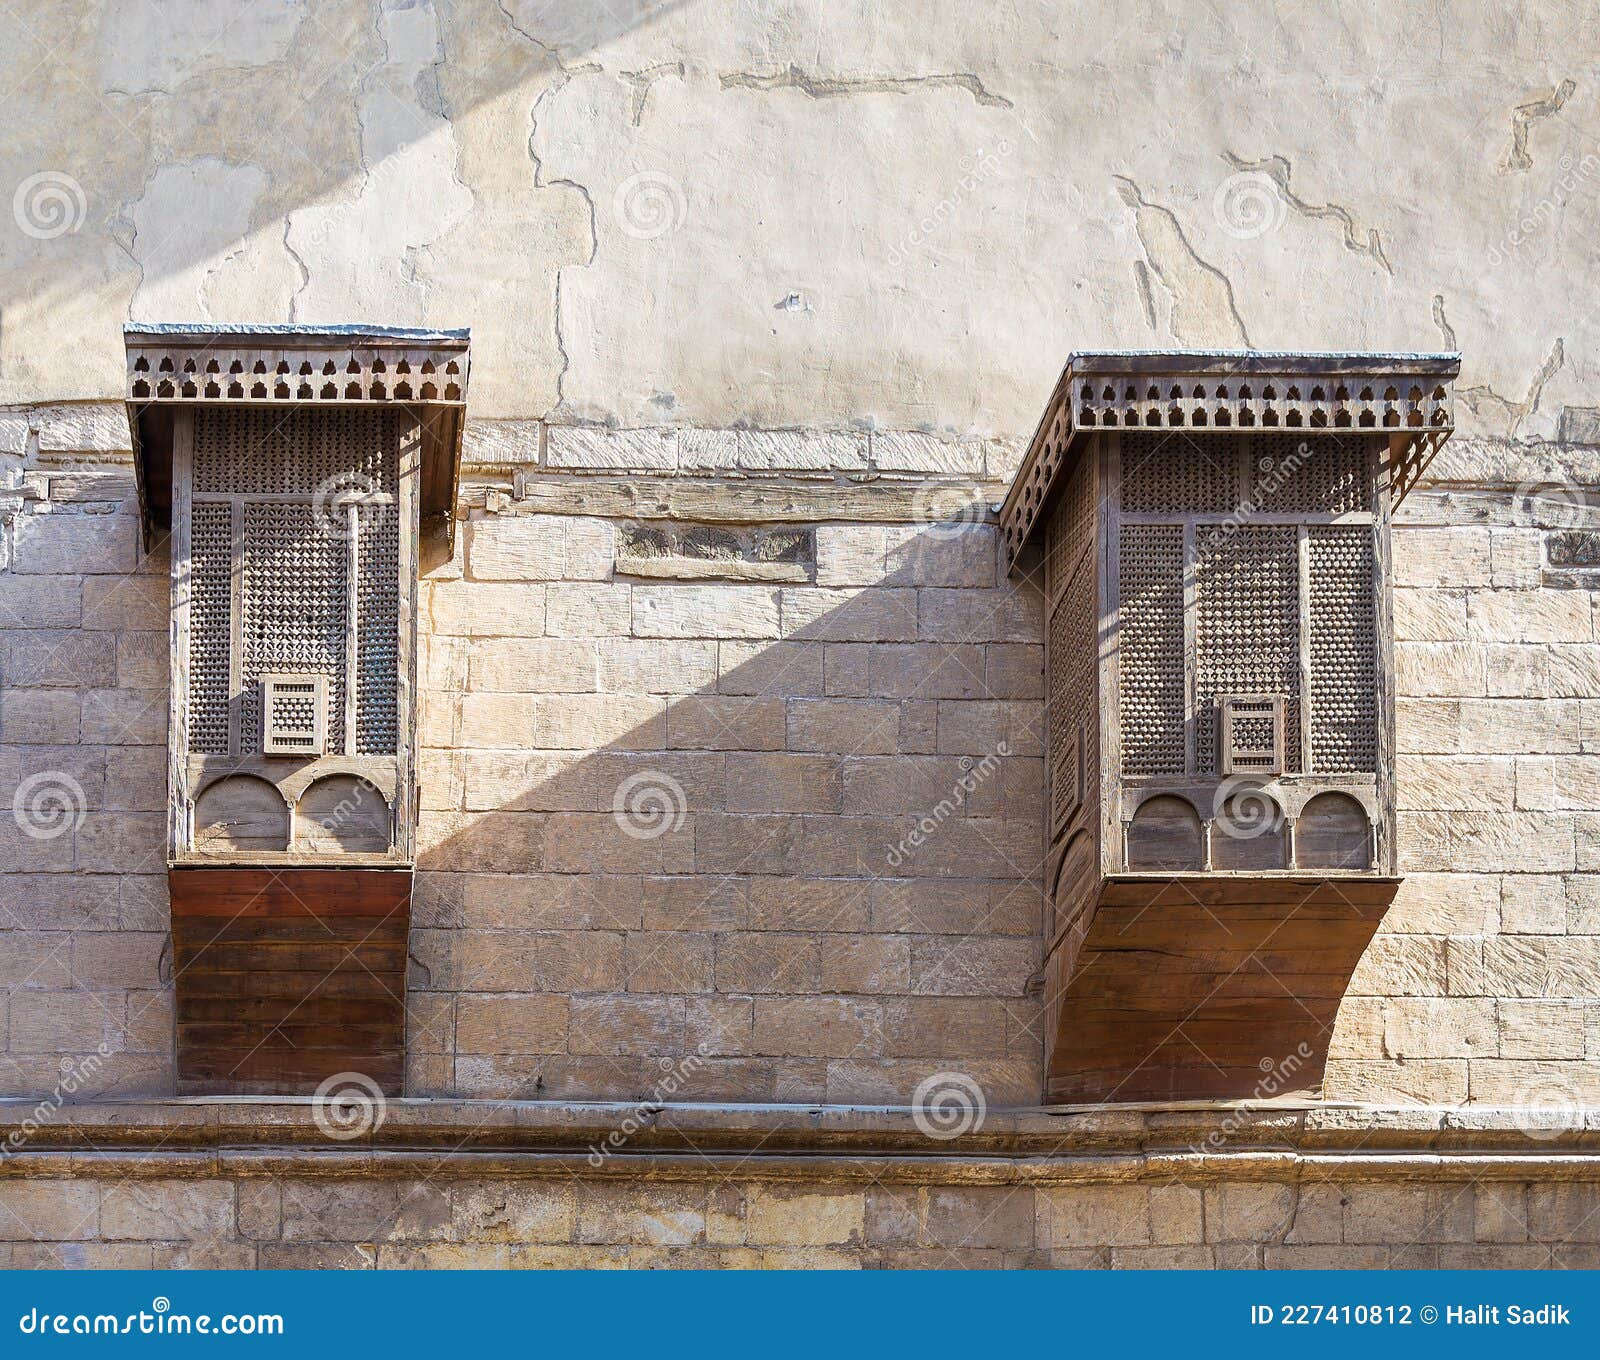 mamluk era style oriel windows with interleaved wooden grid - mashrabiya, on shabby wall, cairo